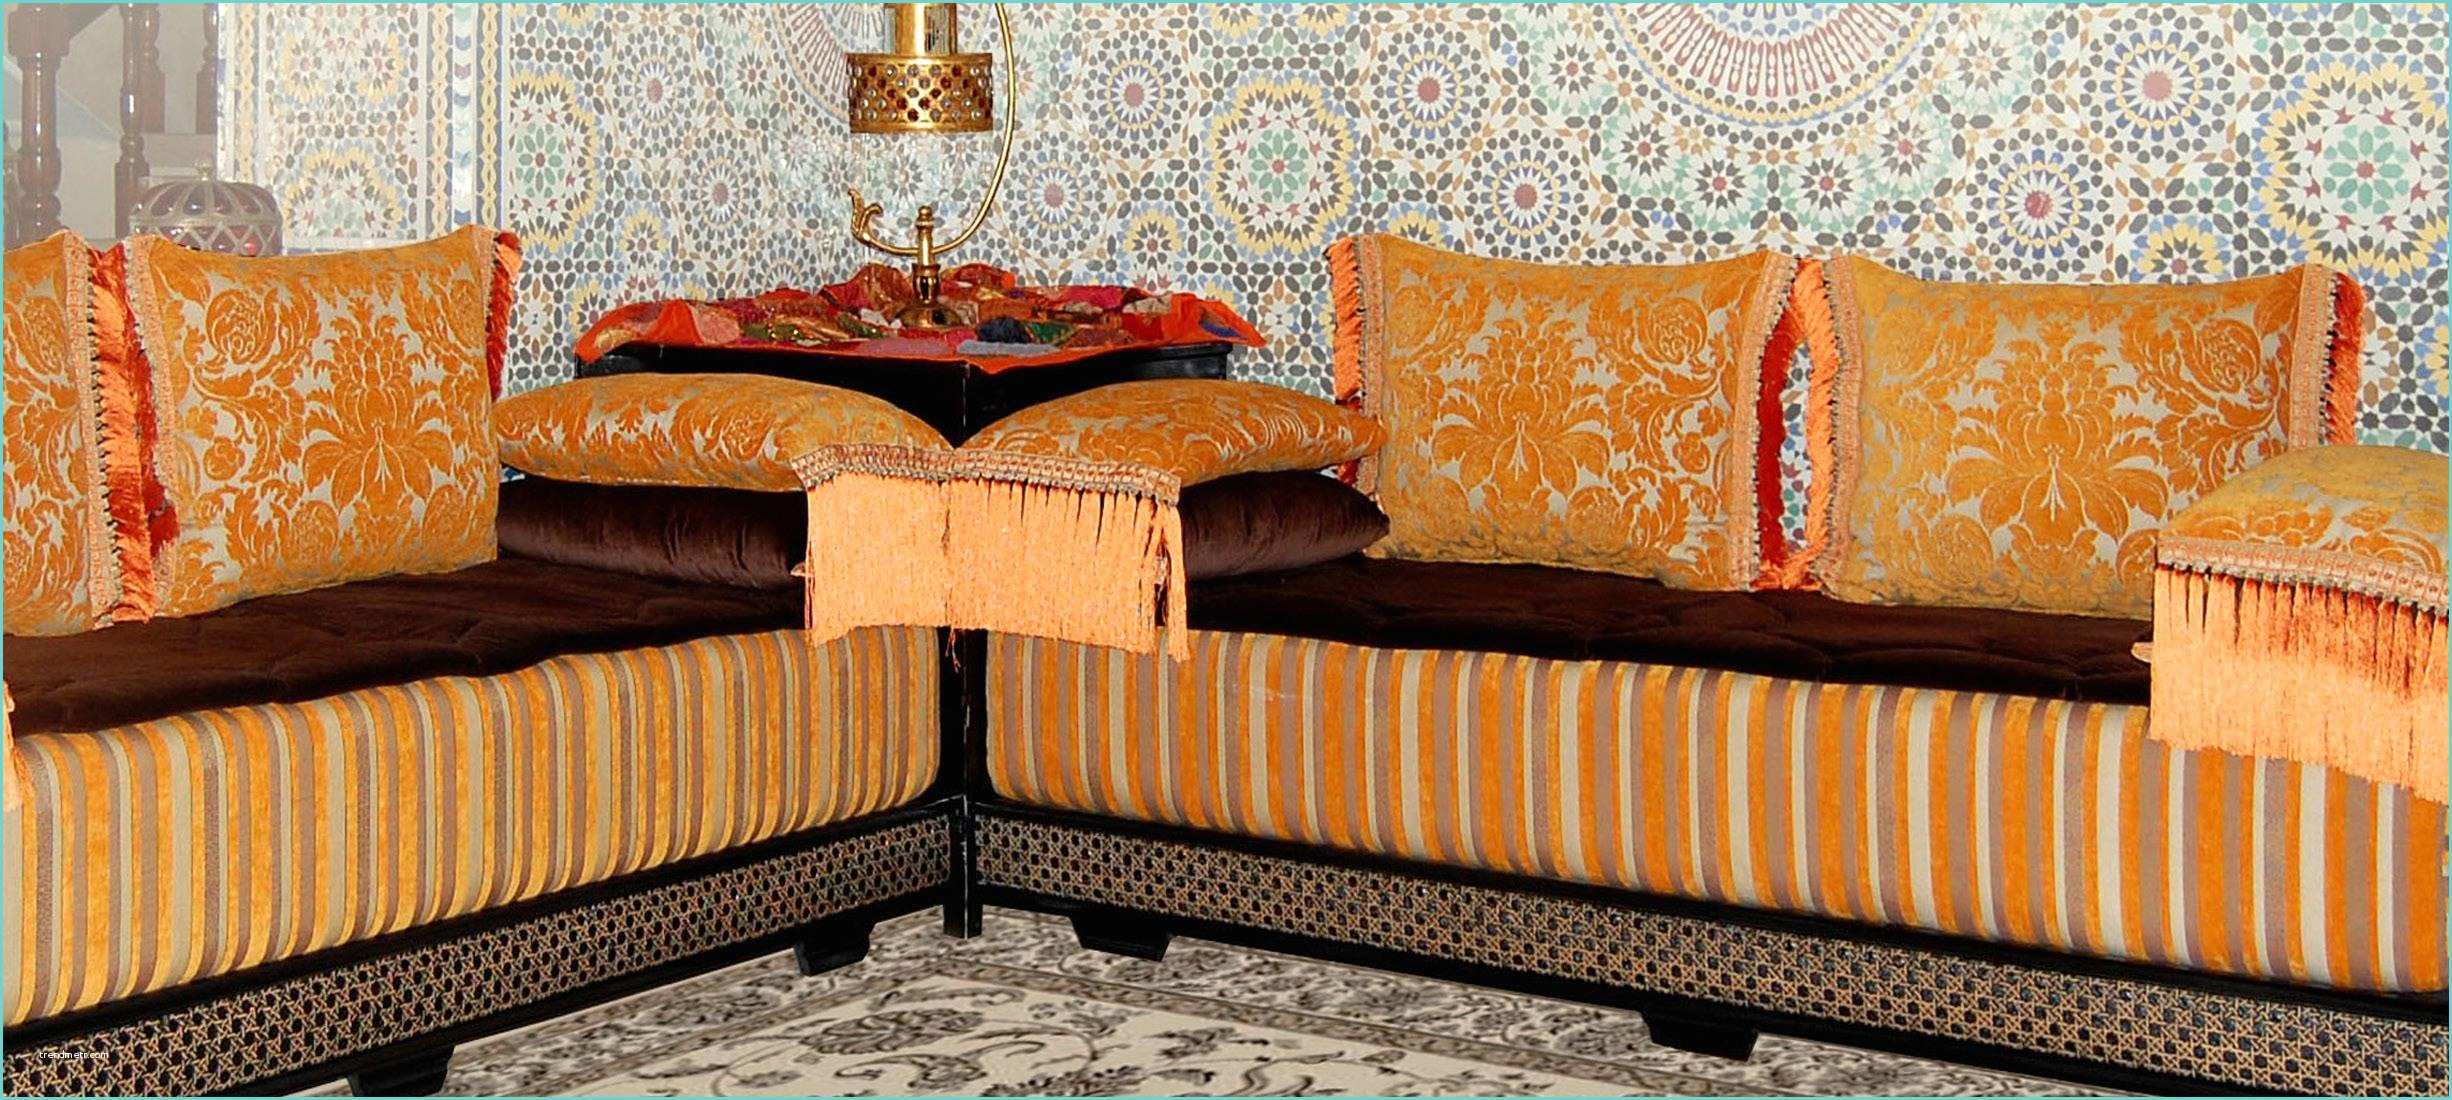 Decor Platre Salon Marocain Deco Salon Marocain Moderne